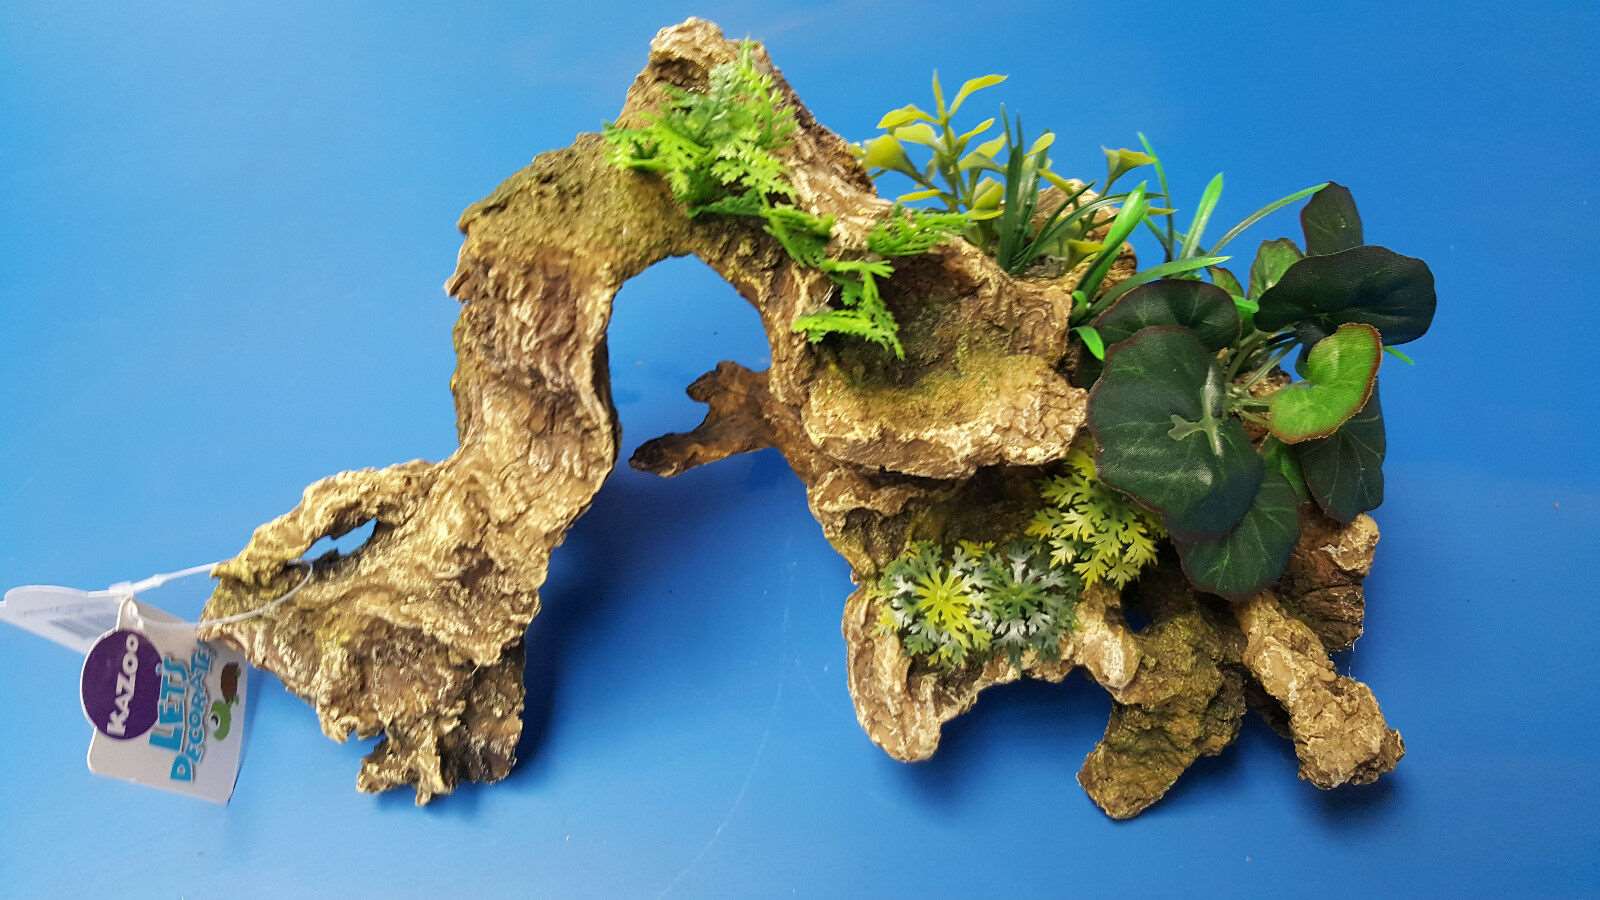 Kazoo Driftwood with Plant Large size Aquarium Ornament